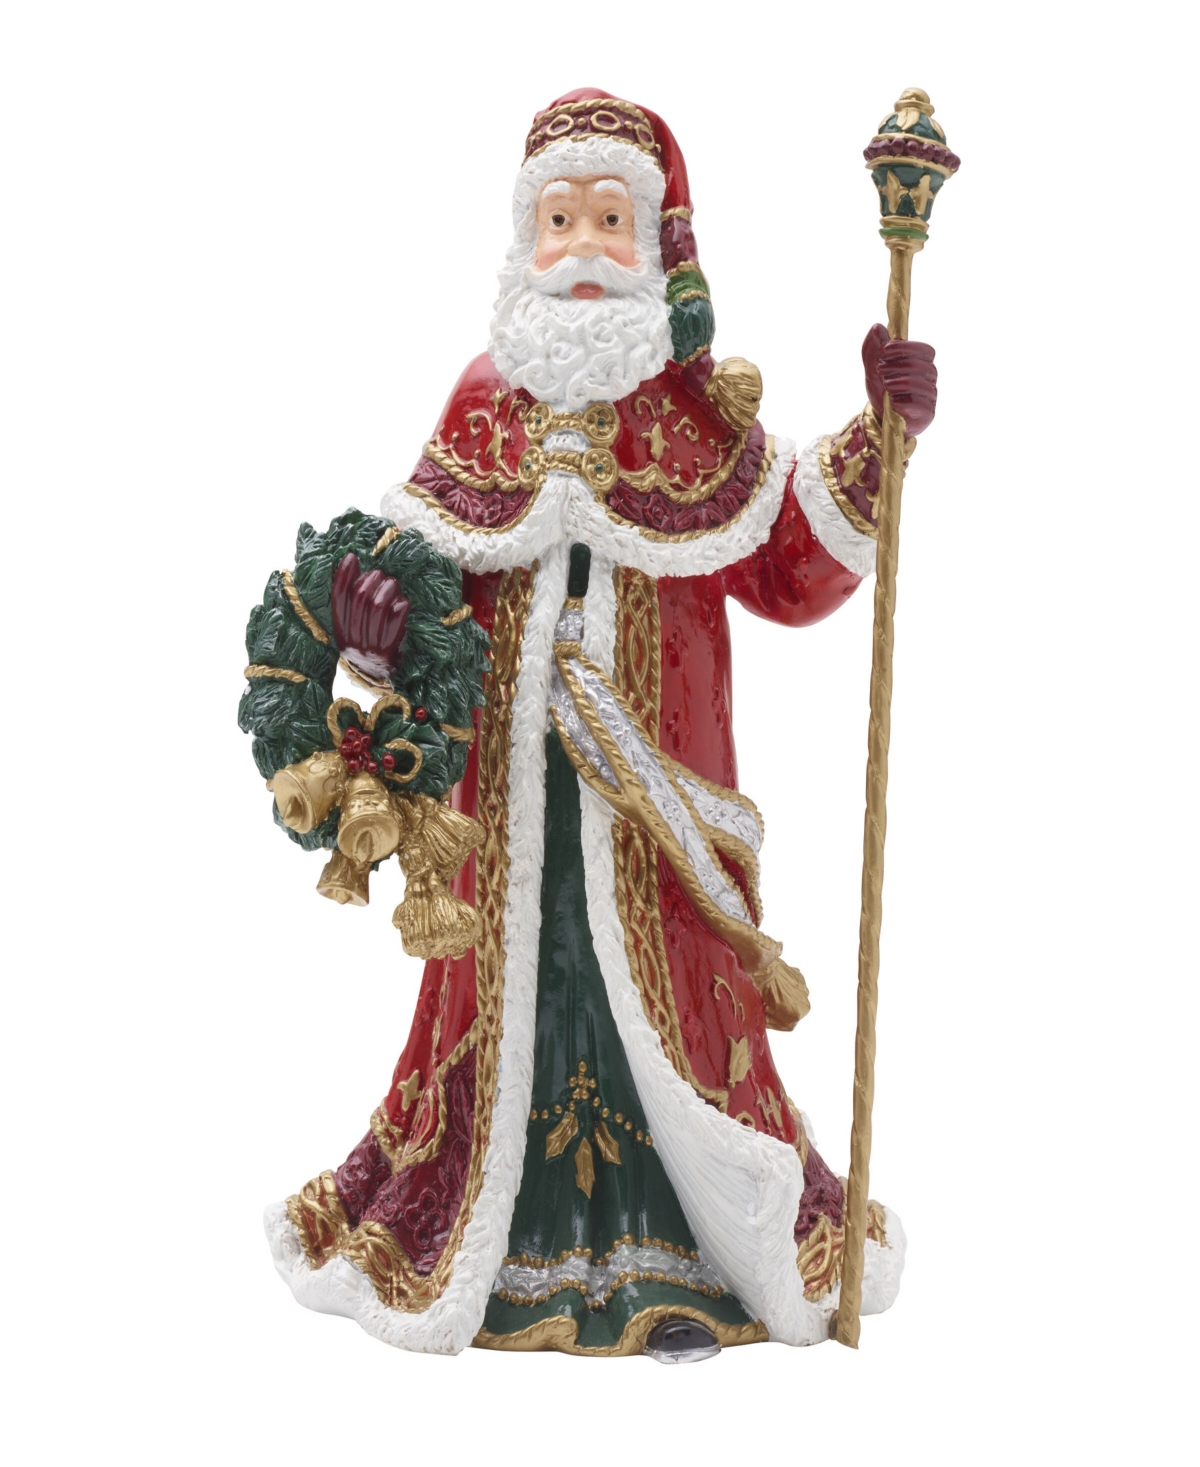 Noel Holiday Musical Santa Figurine, 11-inch - Assorted